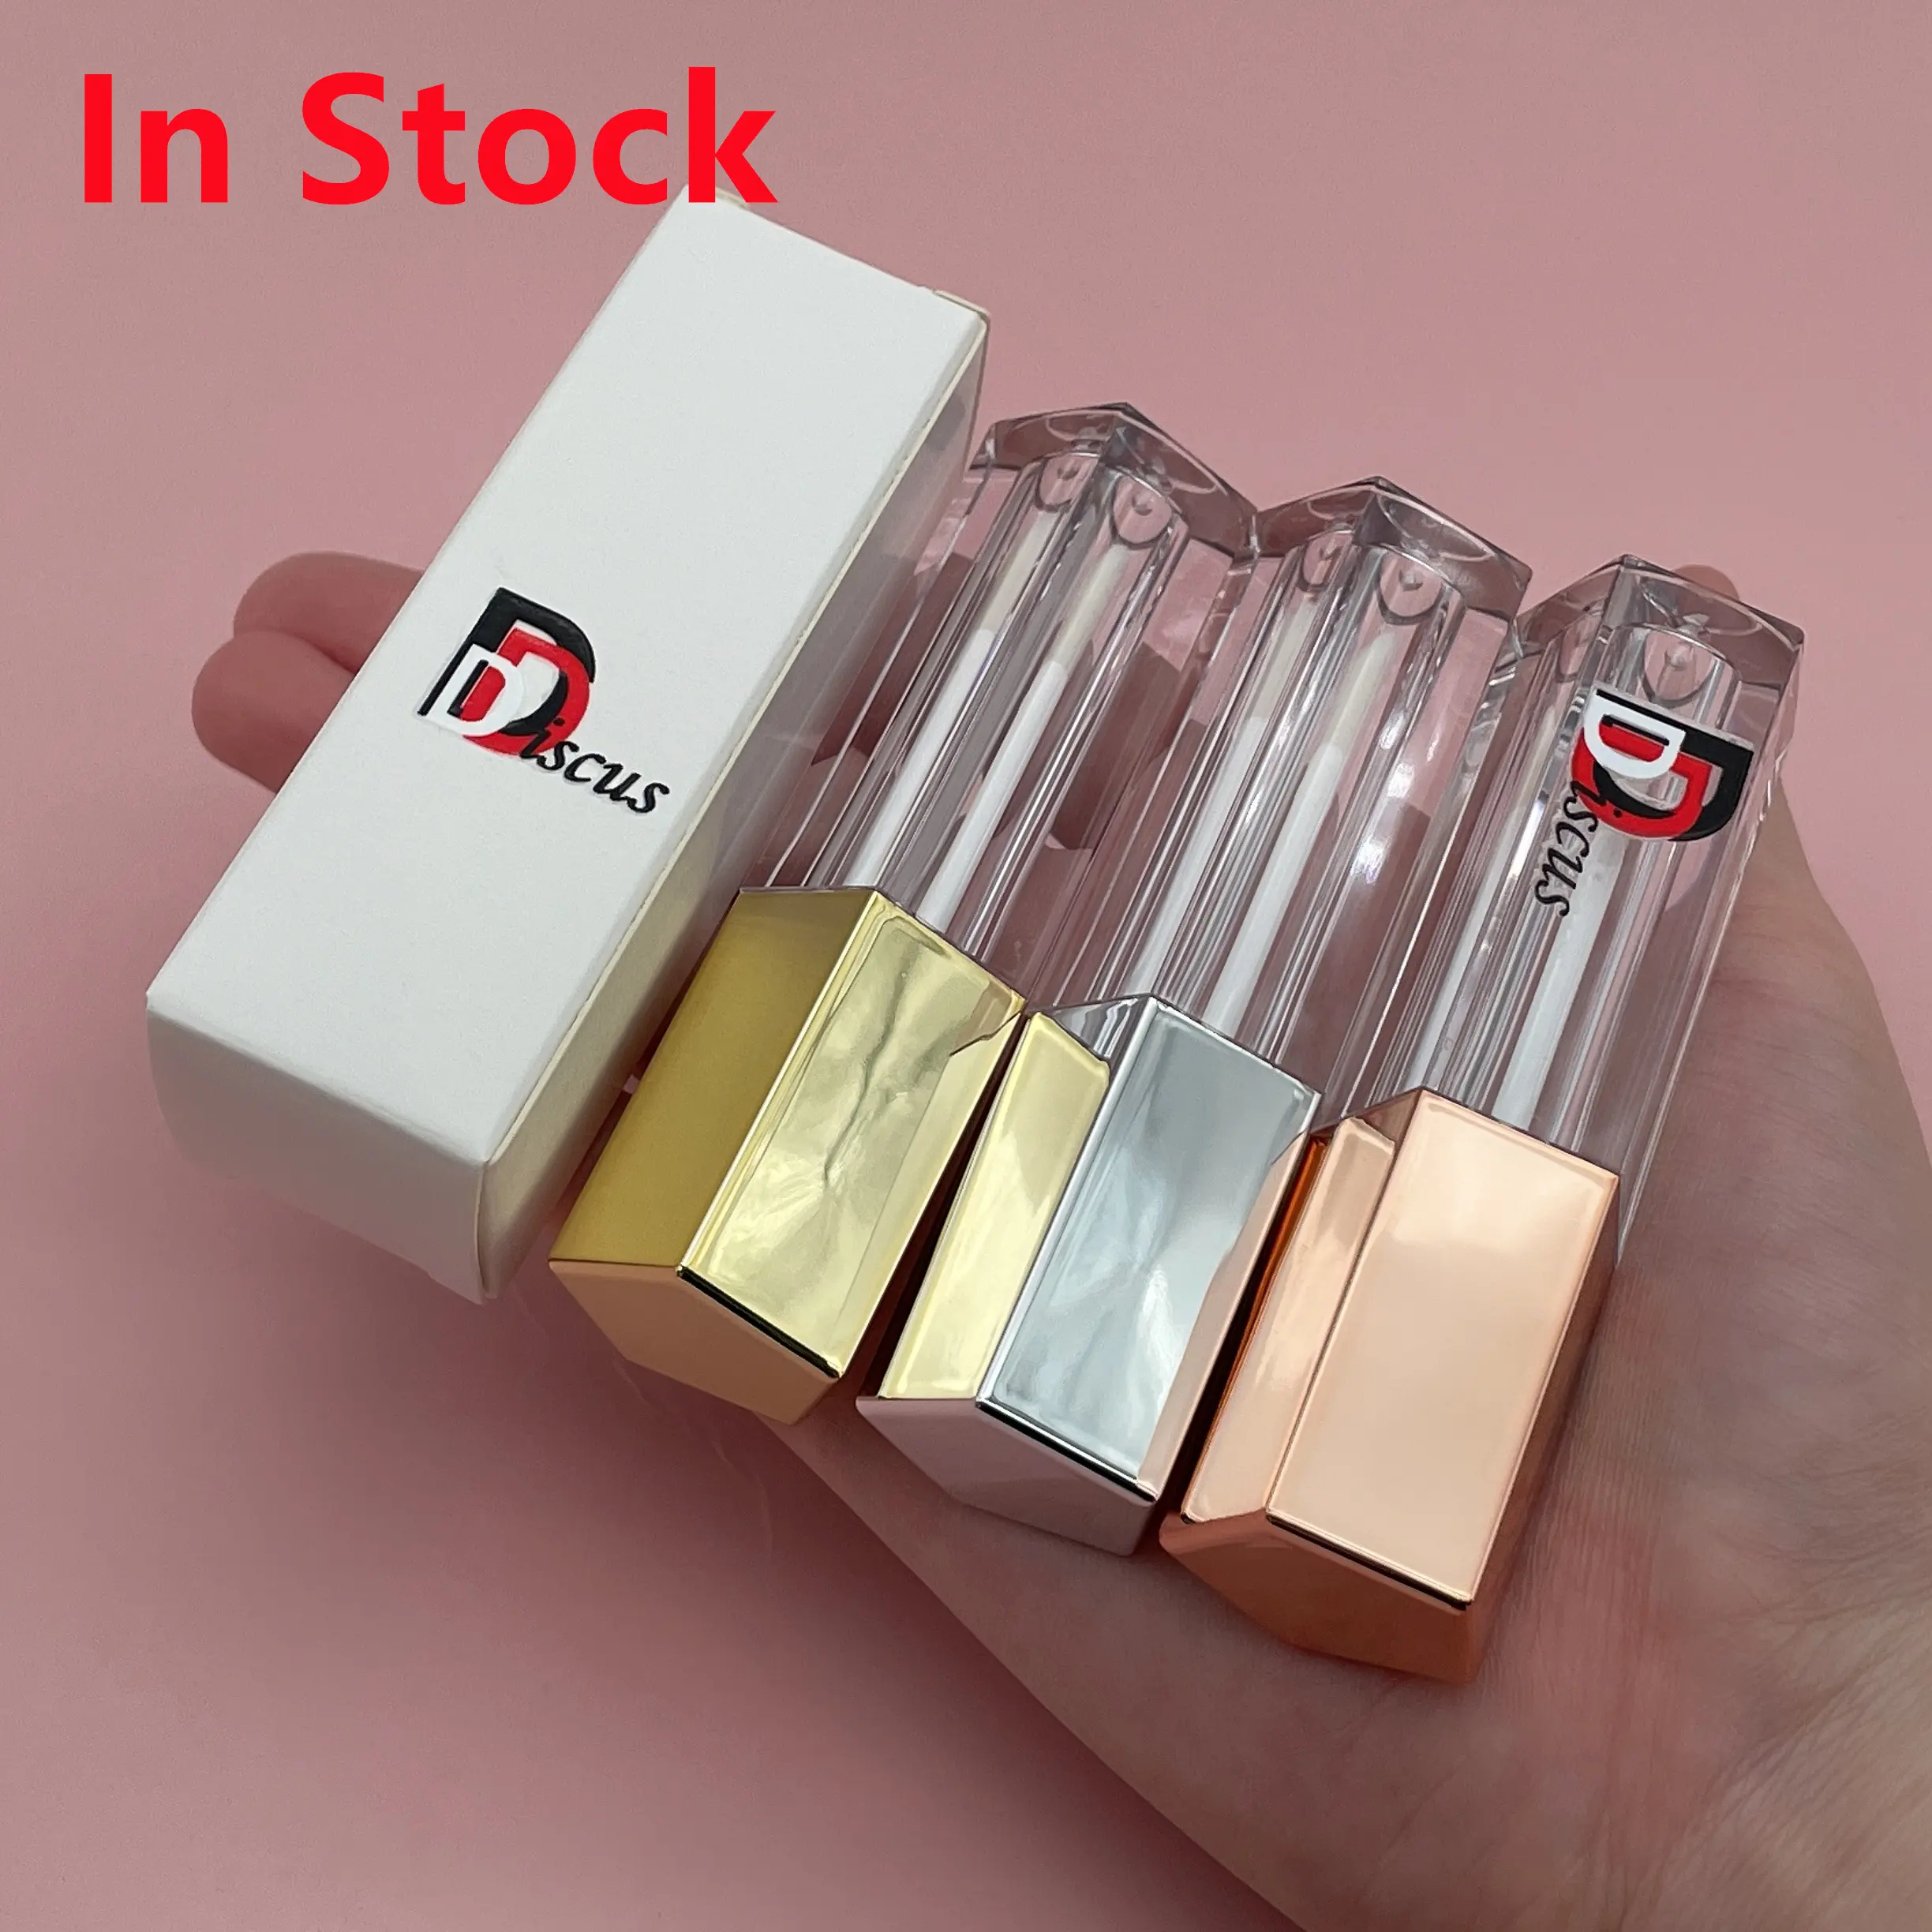 Low Moq Lip Gloss Bottle Luxury Tubes Liptint Rebranding Lip Gloss Tube With Brush Applicator Private Label Lip Balm Container